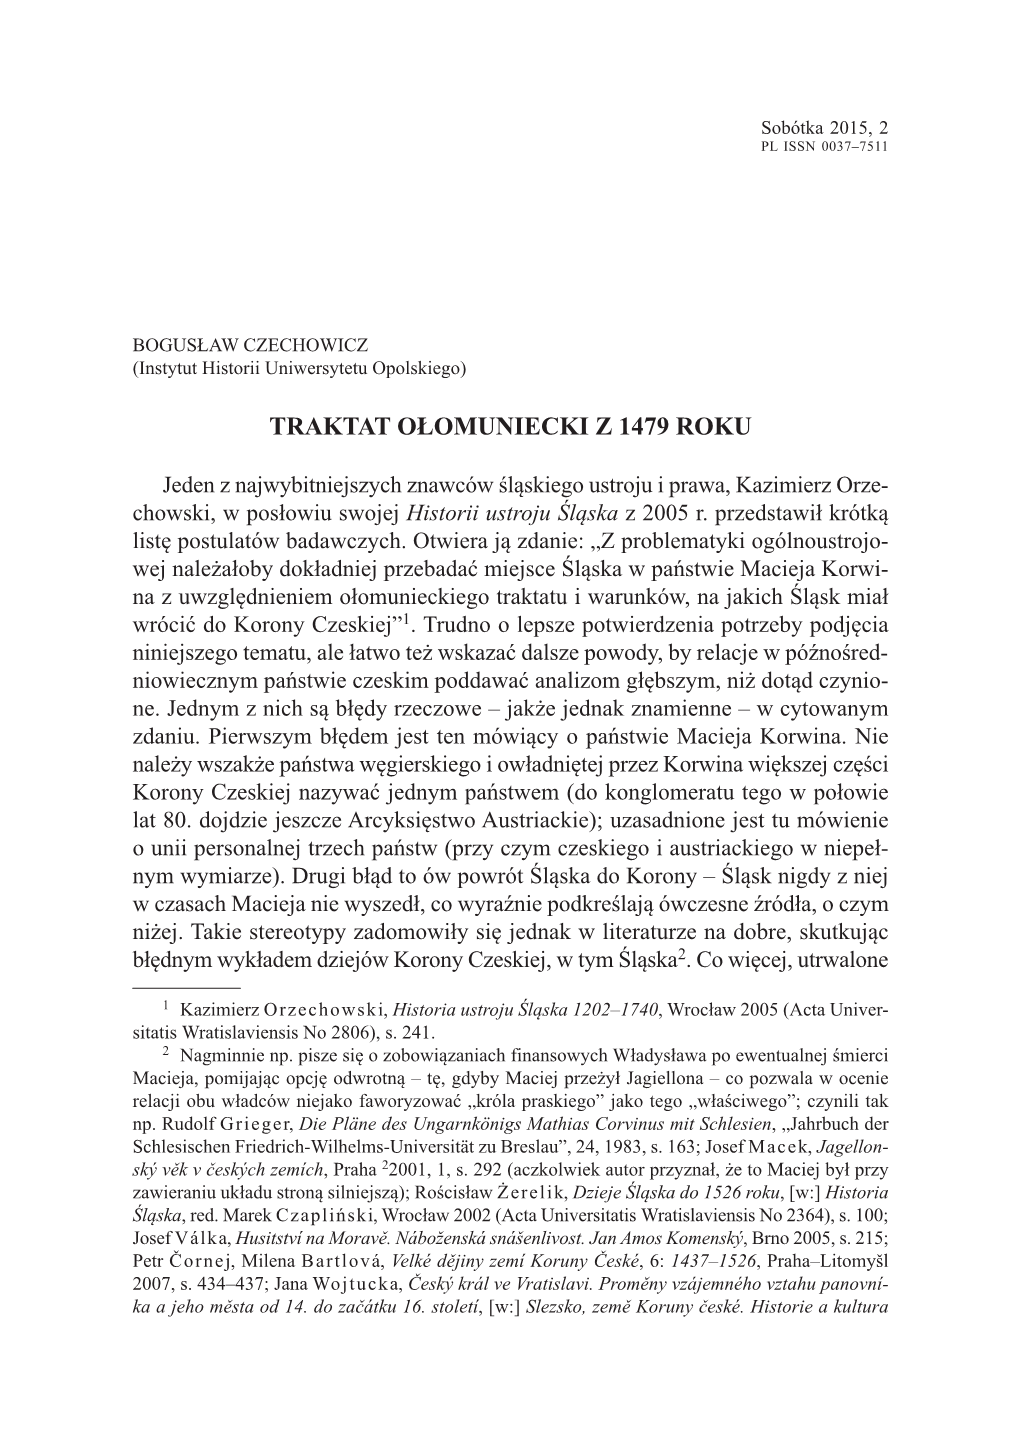 Traktat Ołomuniecki Z 1479 R. [The Peace of Olomouc of 1479]